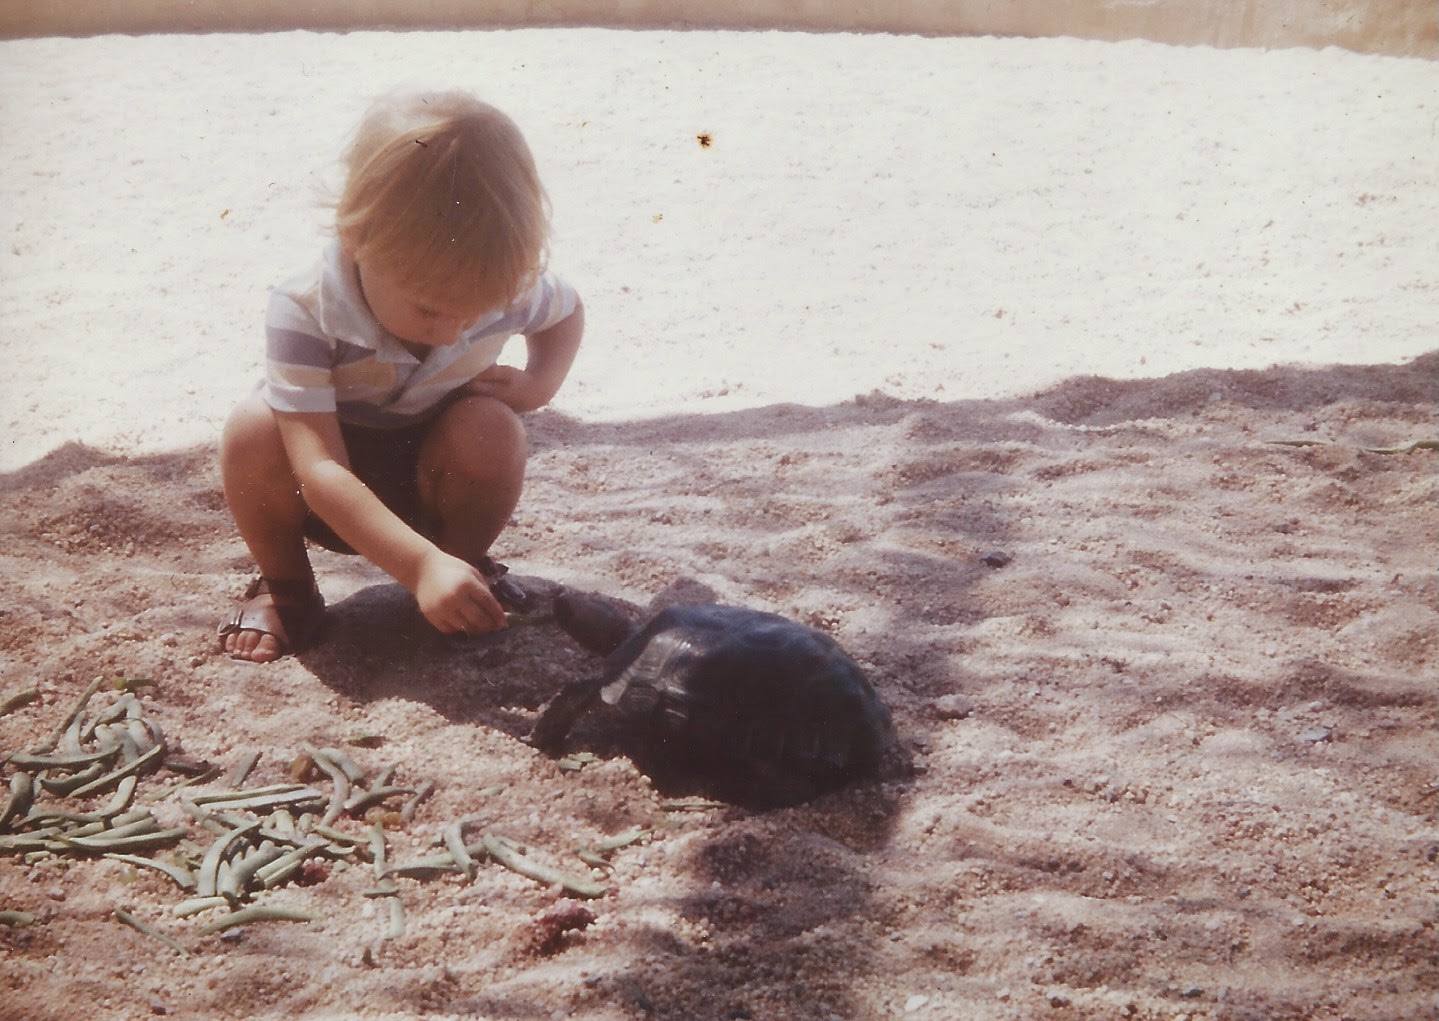 A child on a sandy area feeding a turtle.